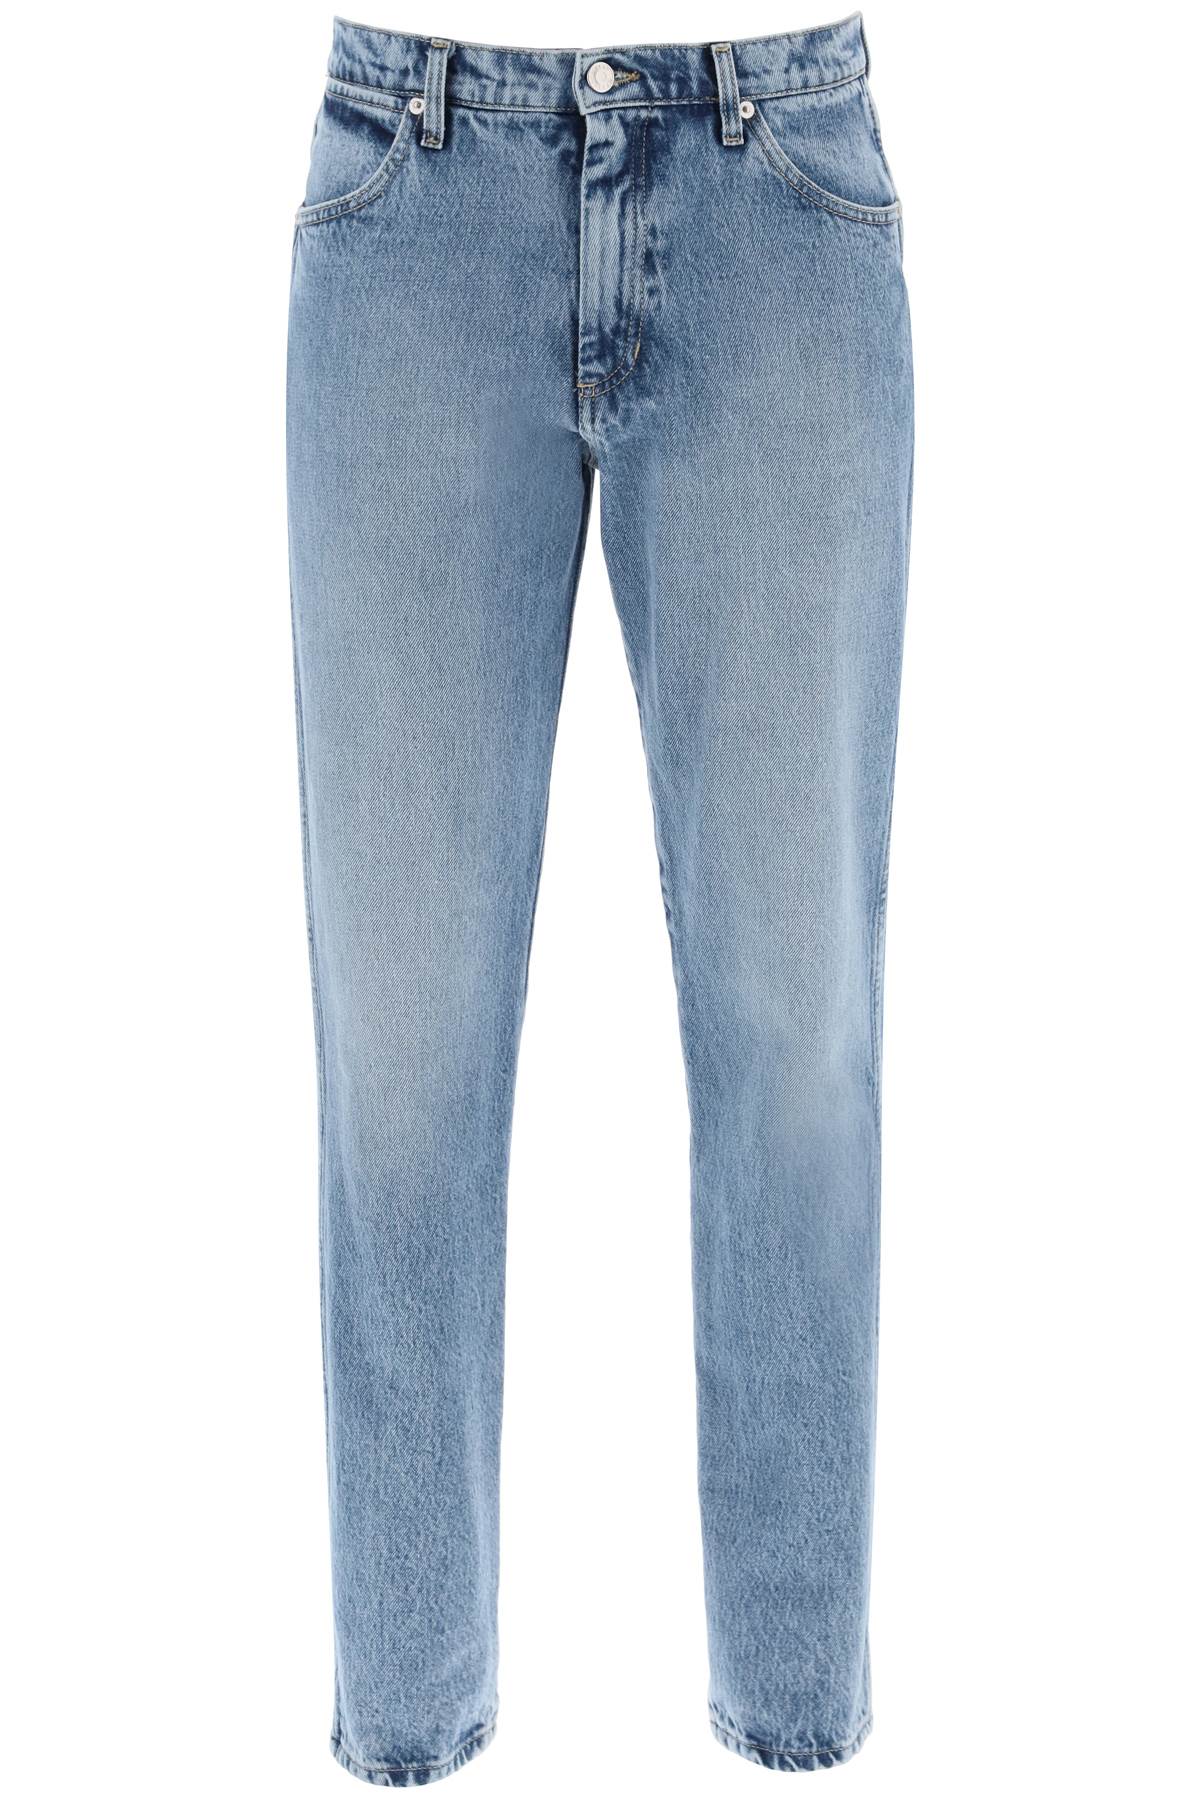 Bally straight cut jeans-0